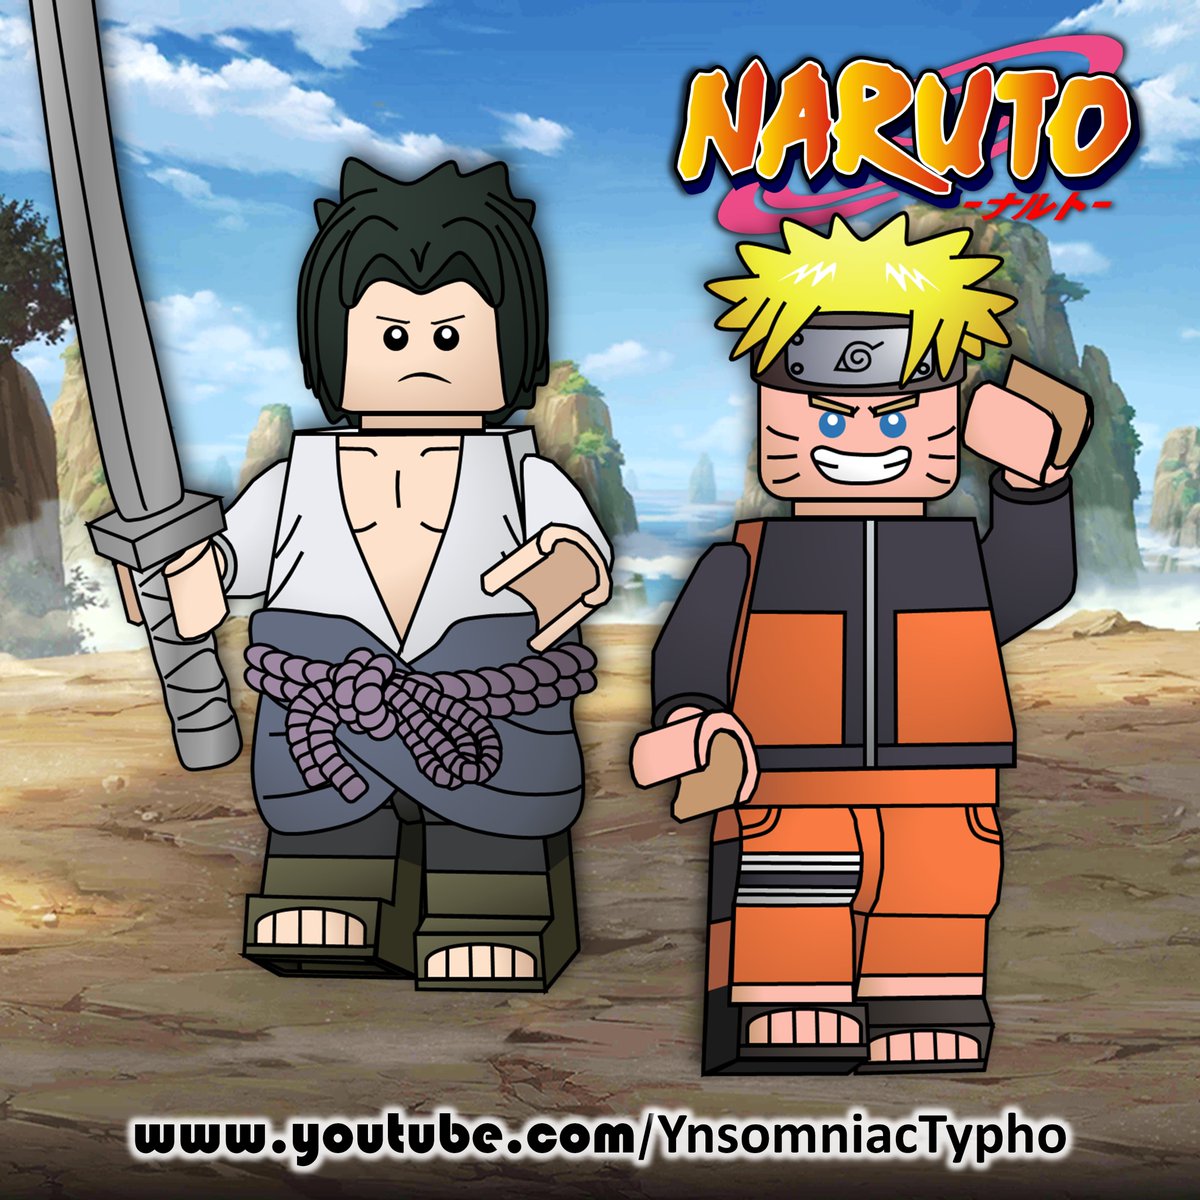 #LEGO #Naruto! En youtube.com/c/ynsomniactyp…

#minifiguraslego #legominifigures #minifigurascustom #ynsomniactypho #youtube #ynsomniac #sasuke #anime #ramen #NarutoShippuden #rasengan